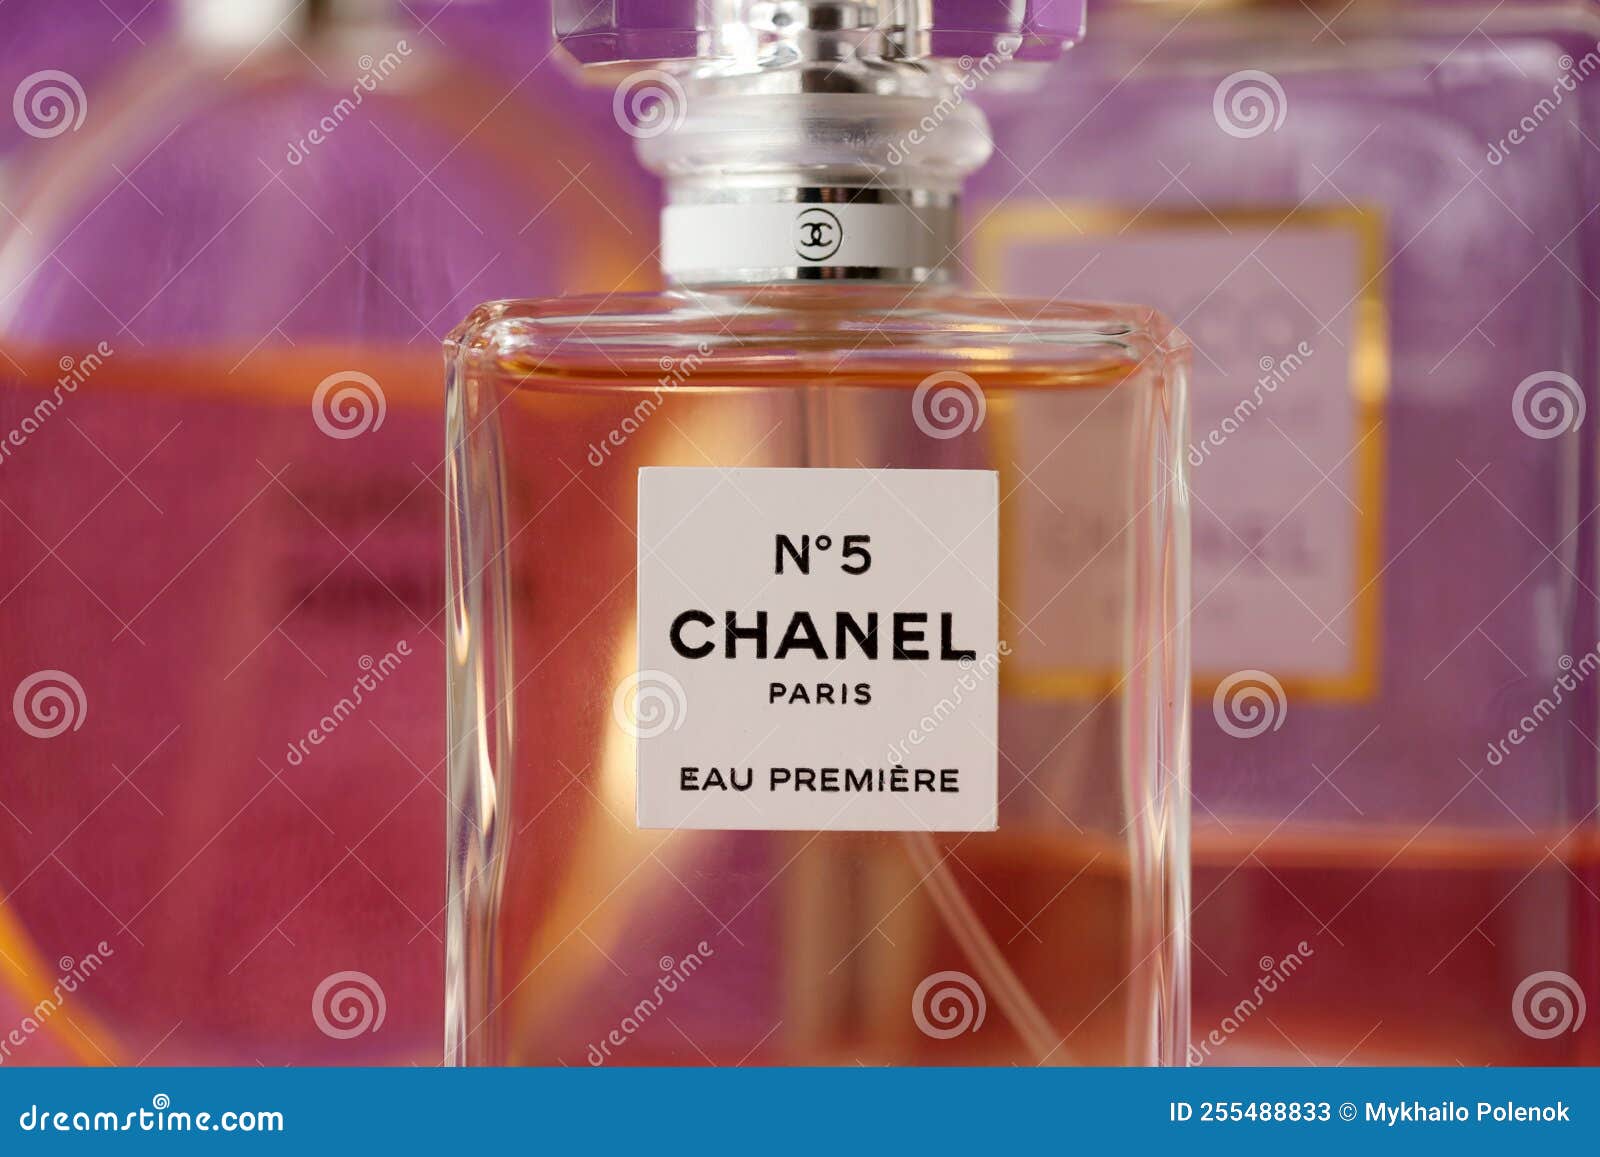 Coco Chanel Perfume Logo Stock Photos - Free & Royalty-Free